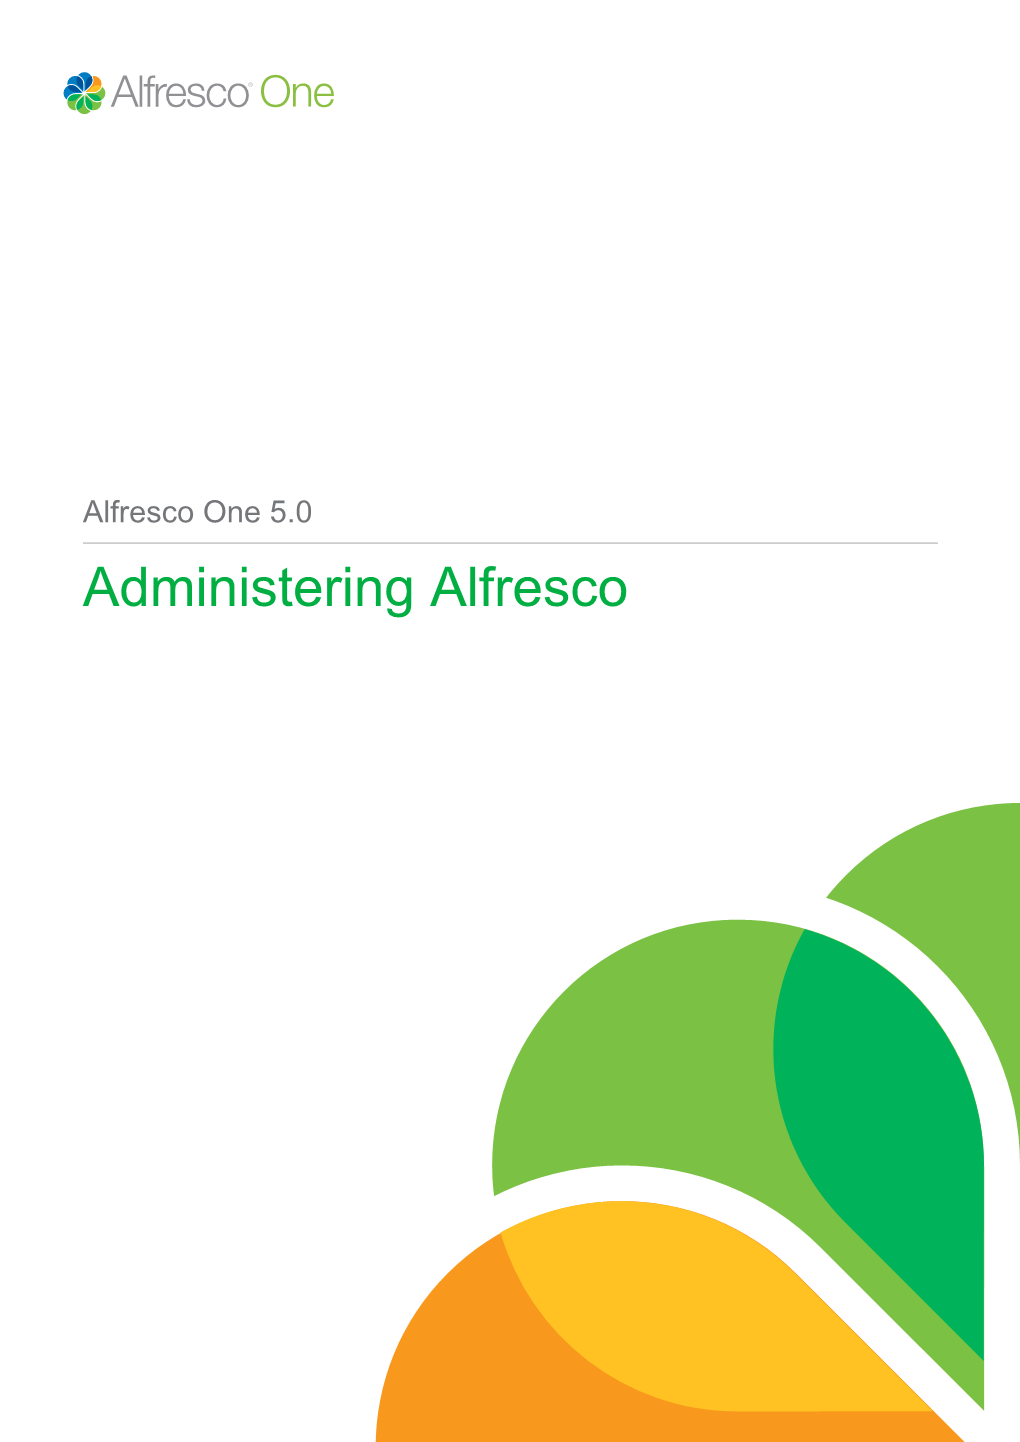 Administering Alfresco Contents